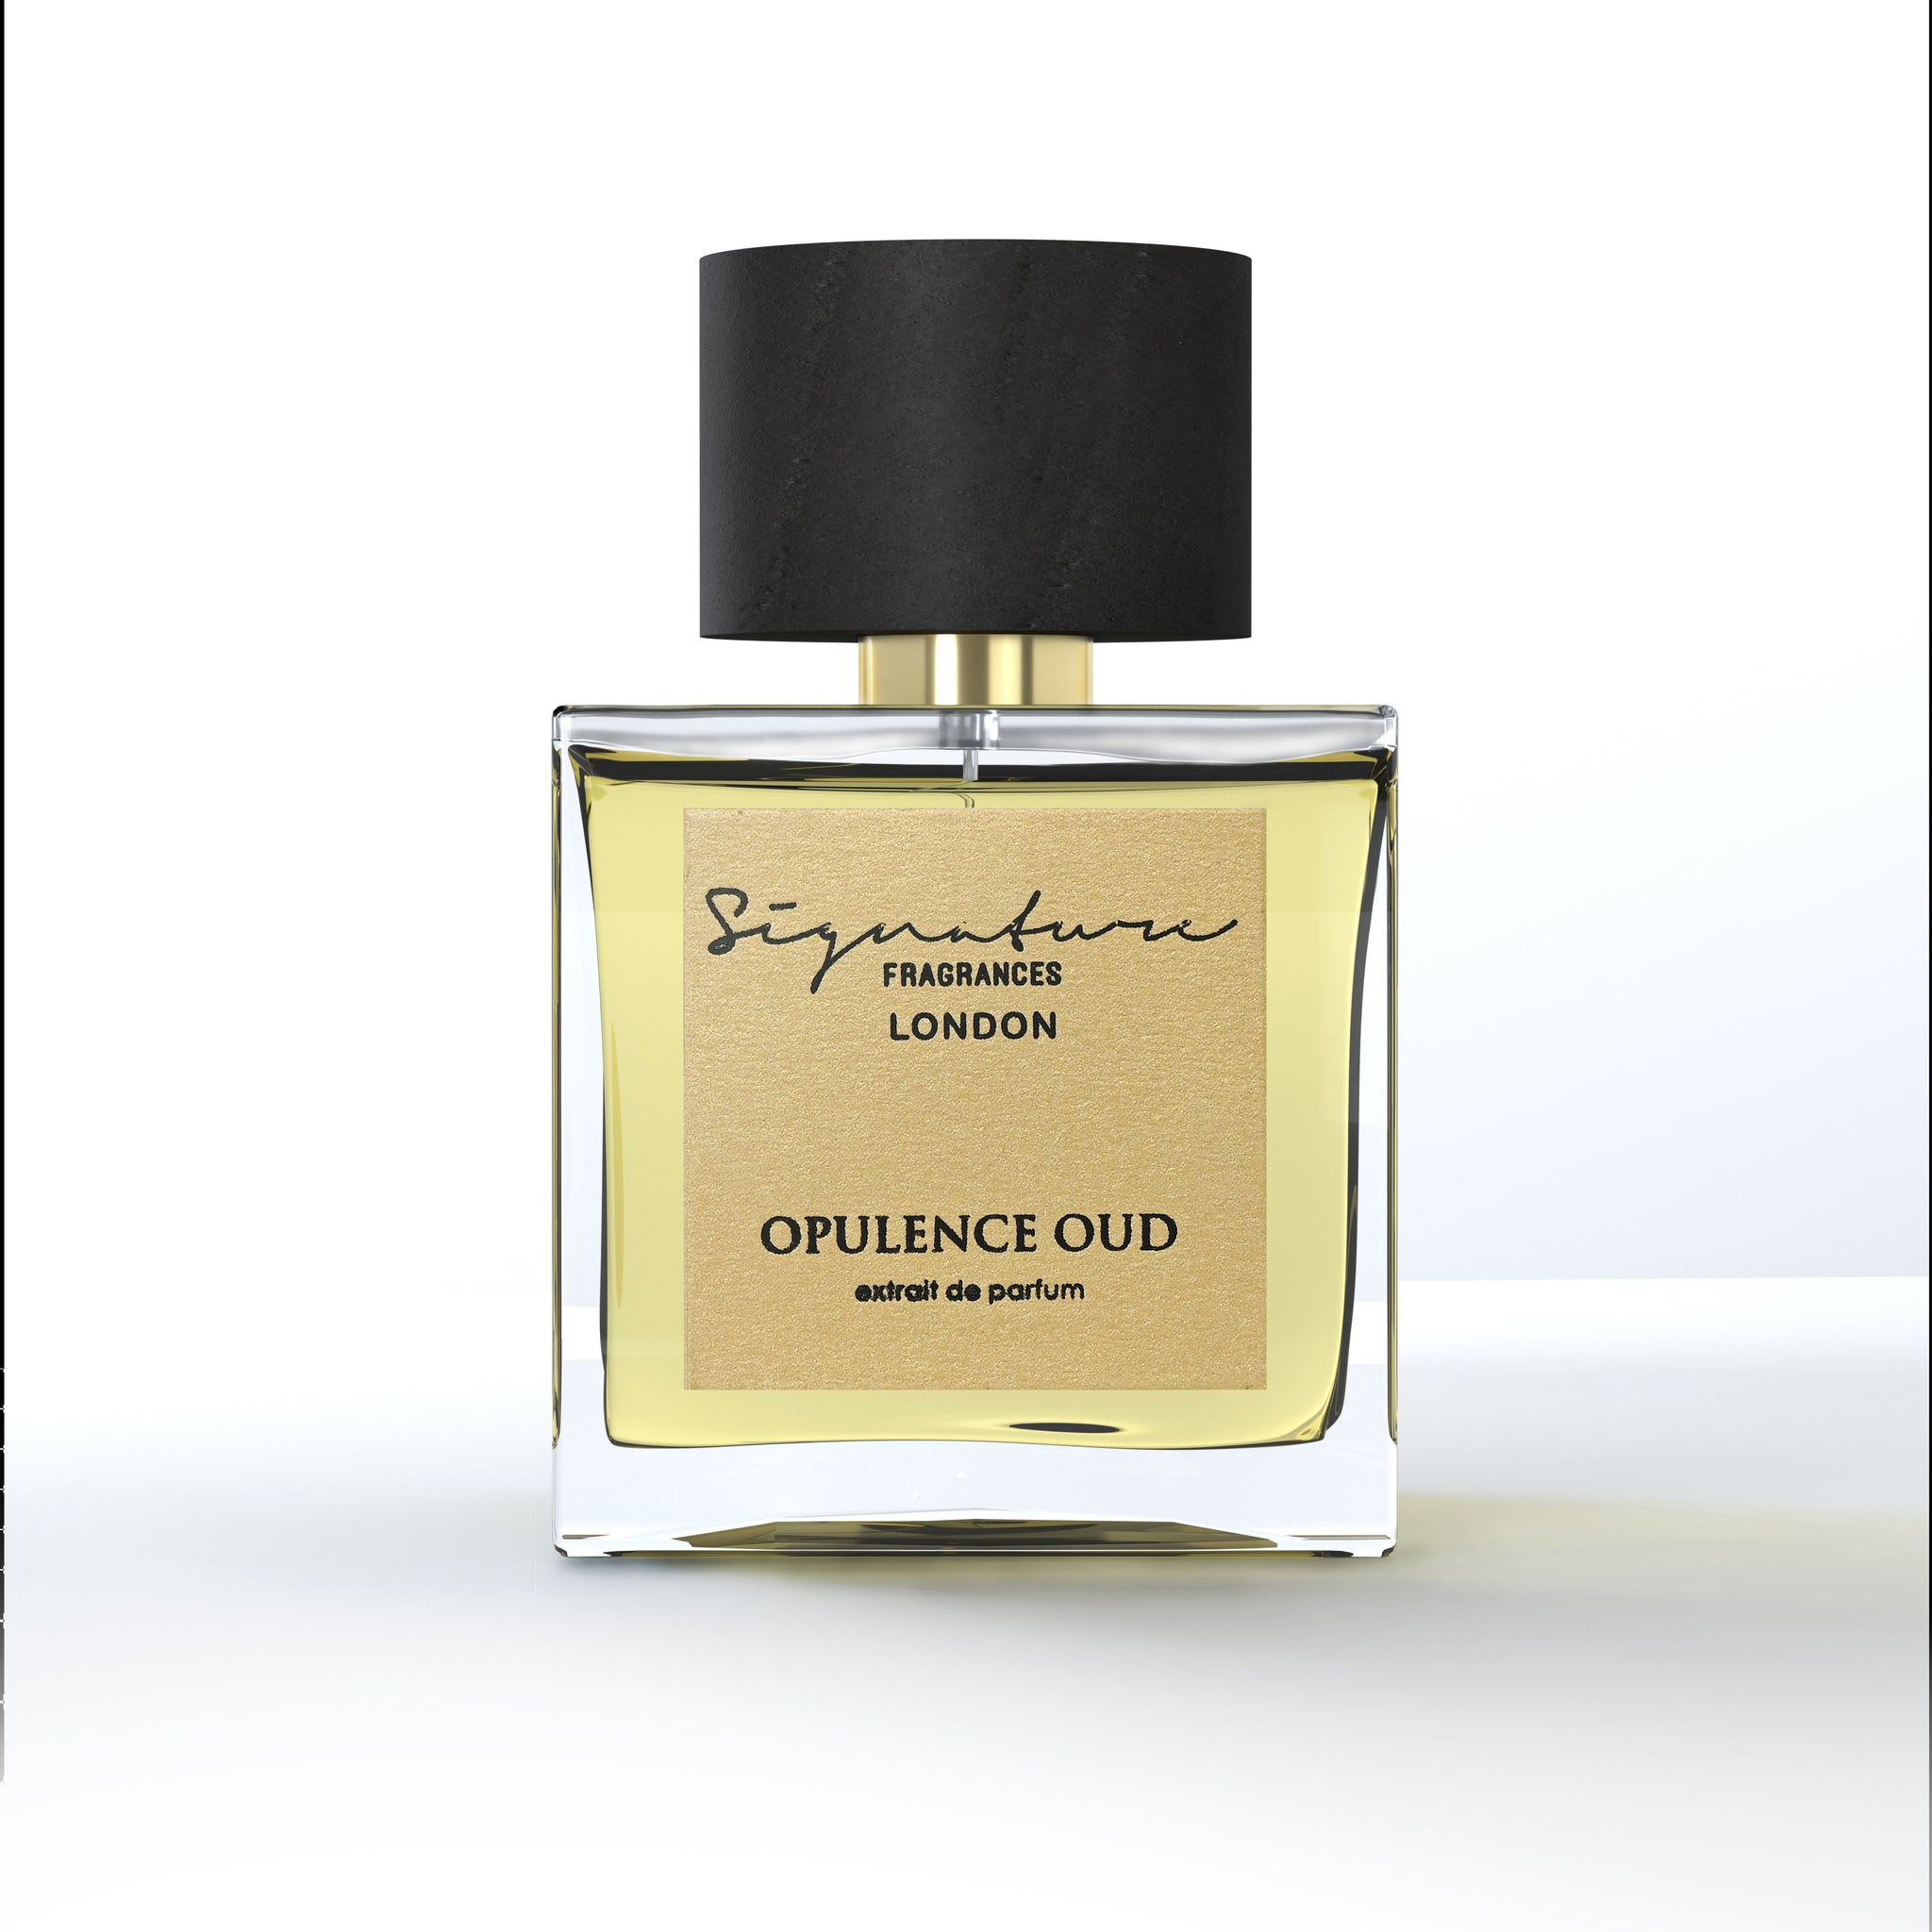 Opulence Oud - Signature Fragrances London